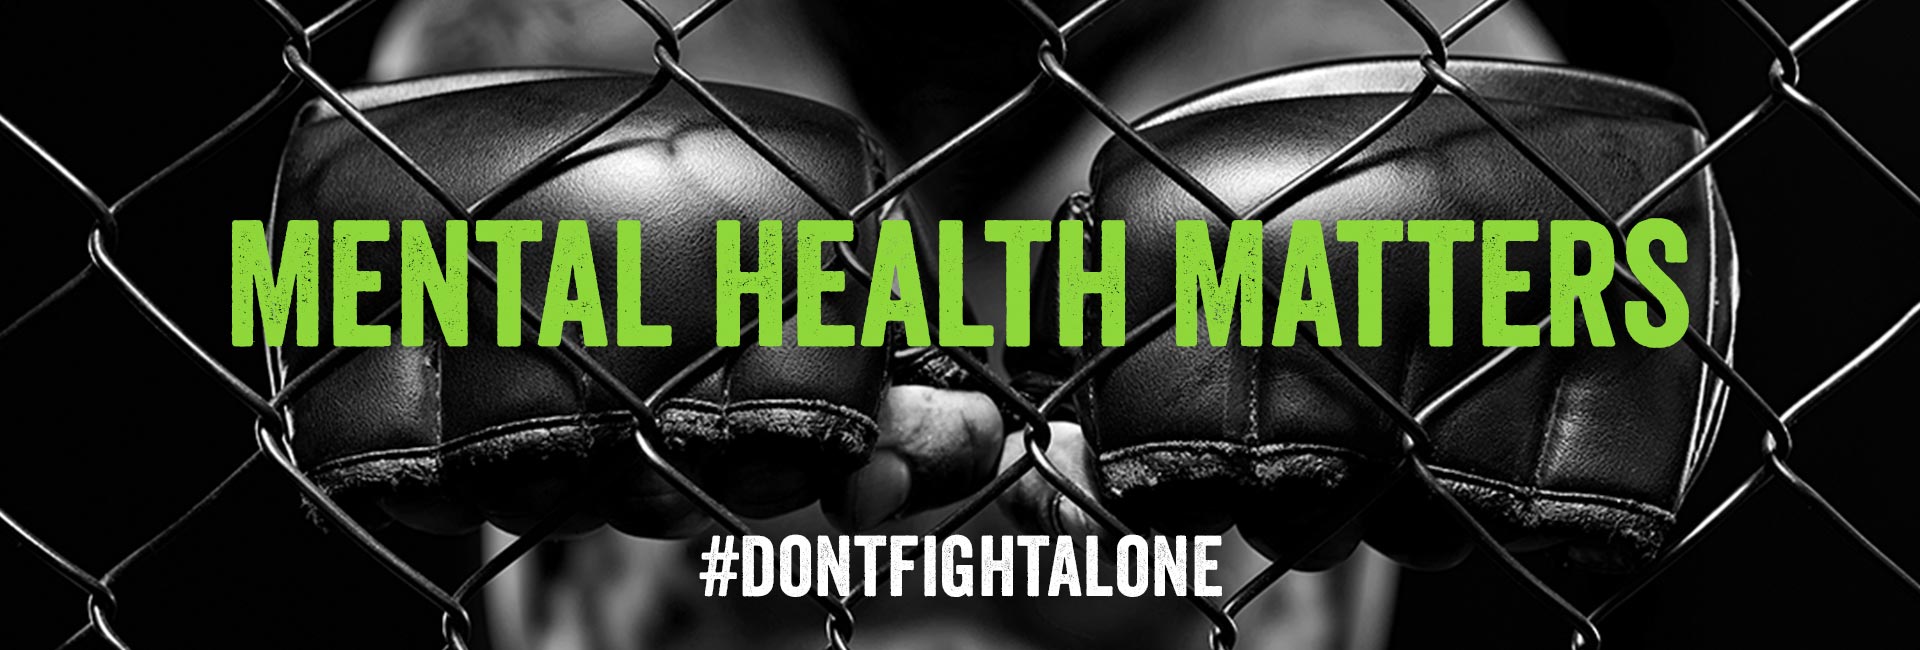 Mental Health Matters MMA